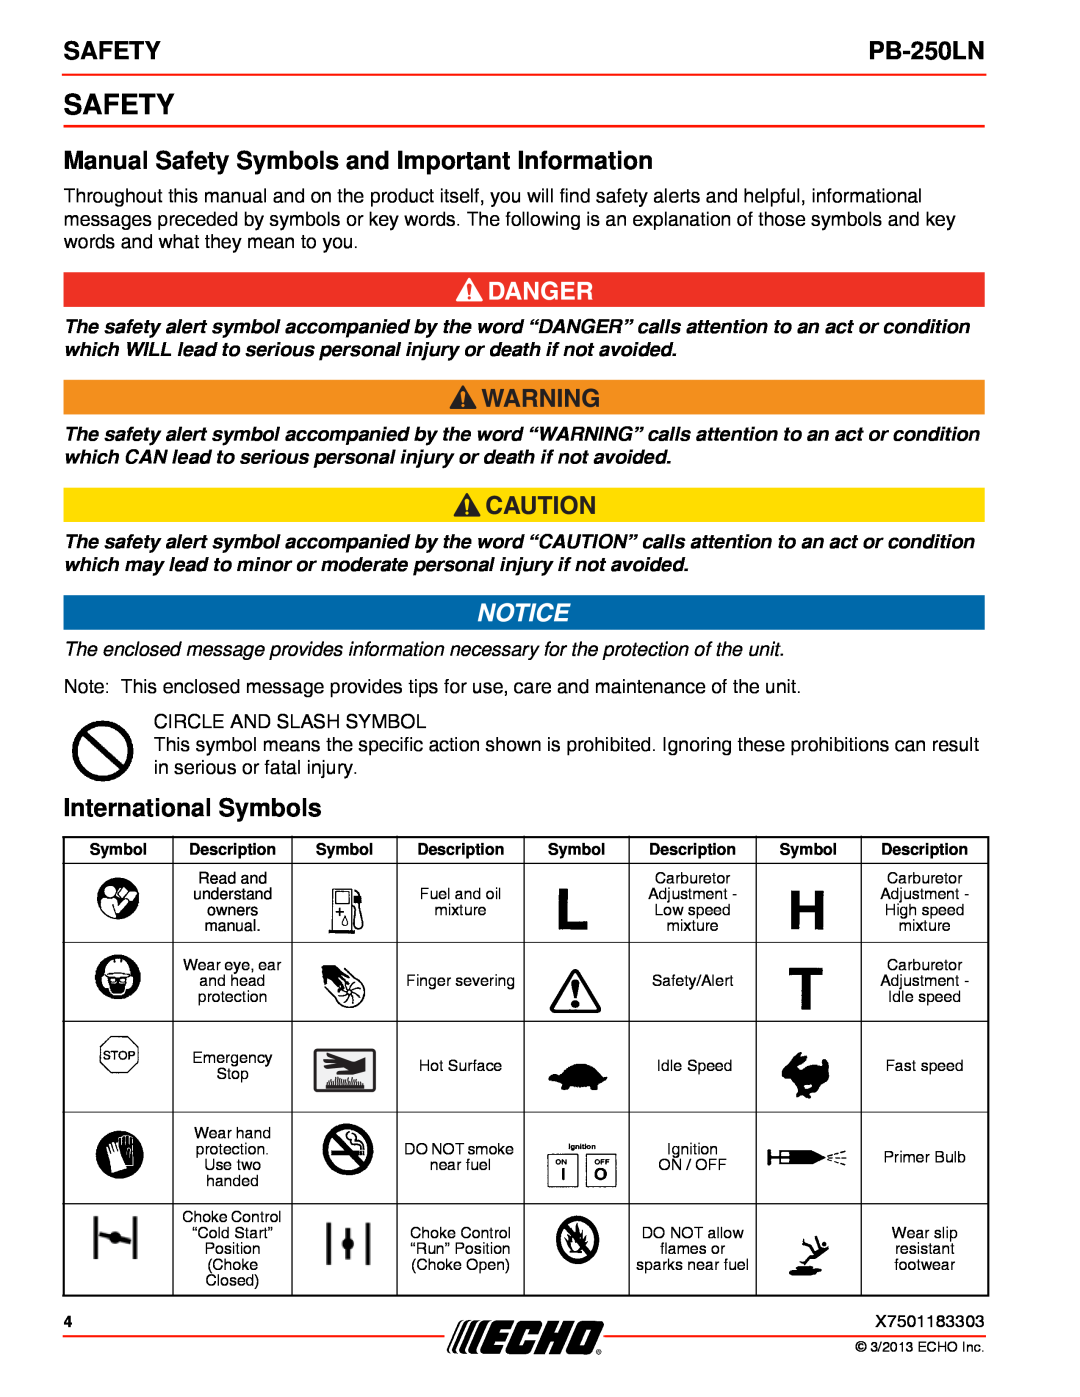 Echo PB-250LN specifications Manual Safety Symbols and Important Information, International Symbols 